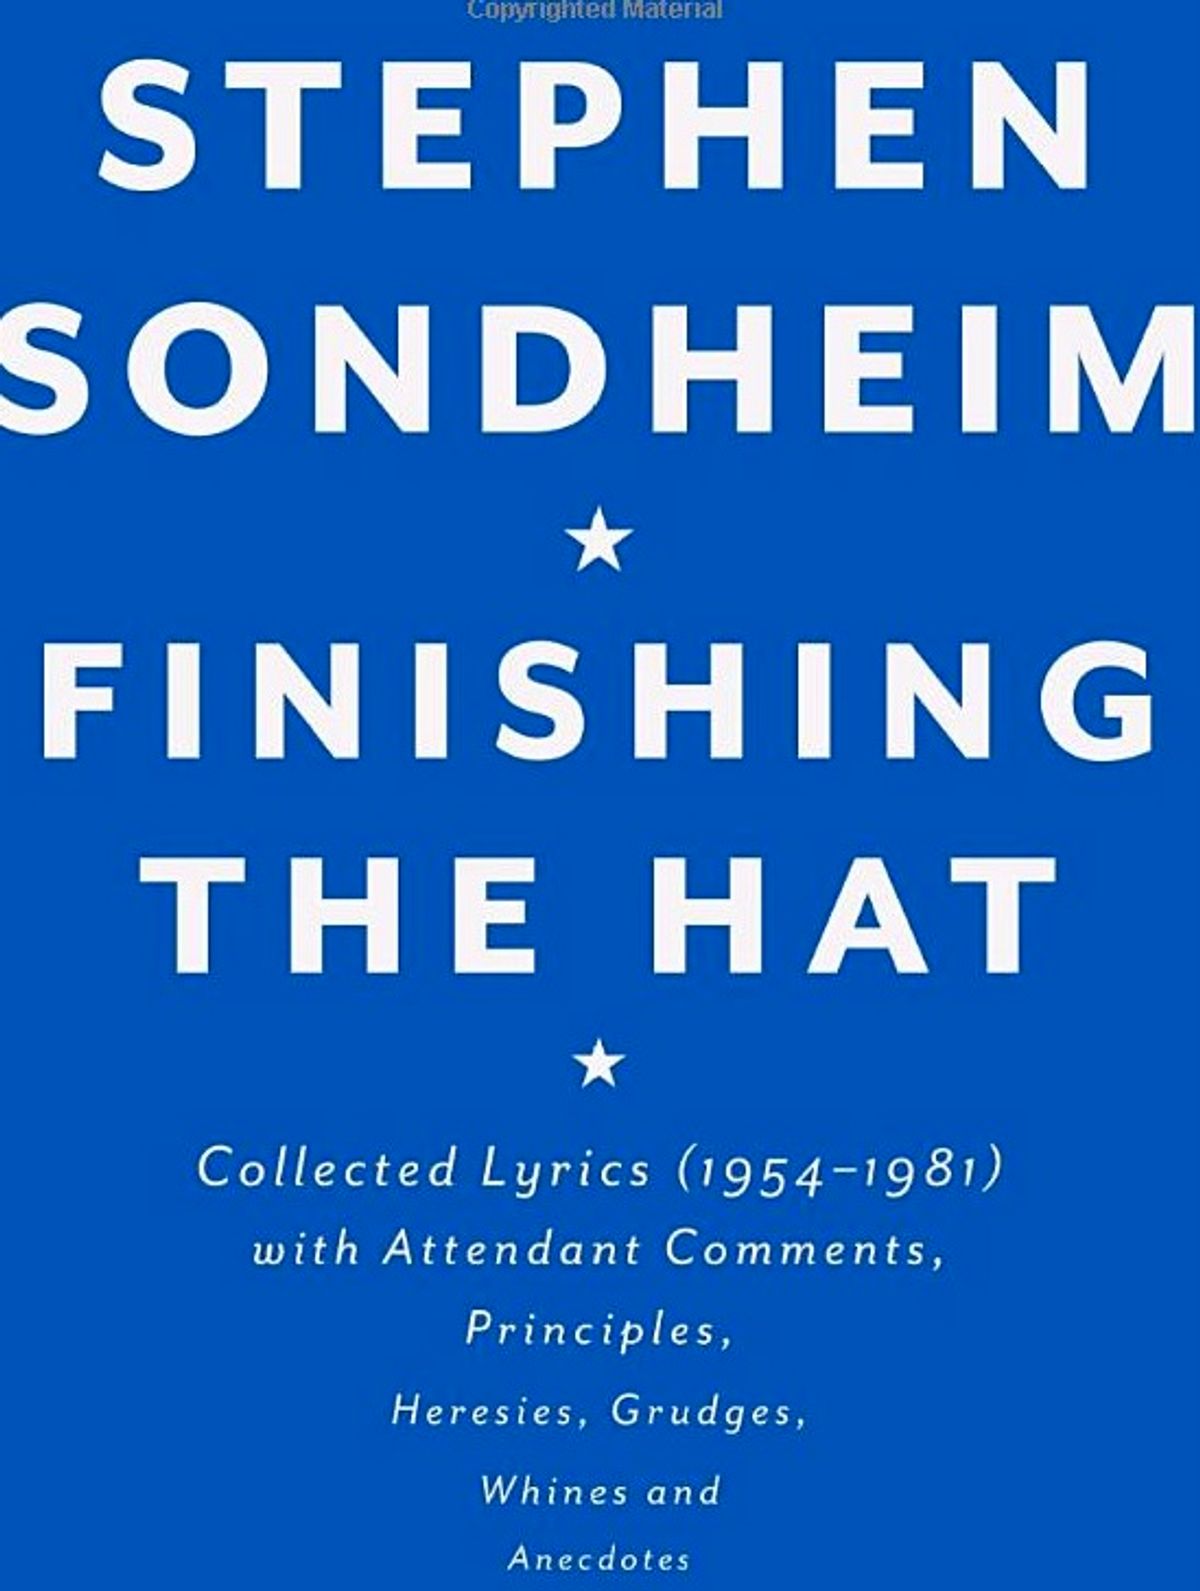 Finishing the Hat by Stephen Sondheim